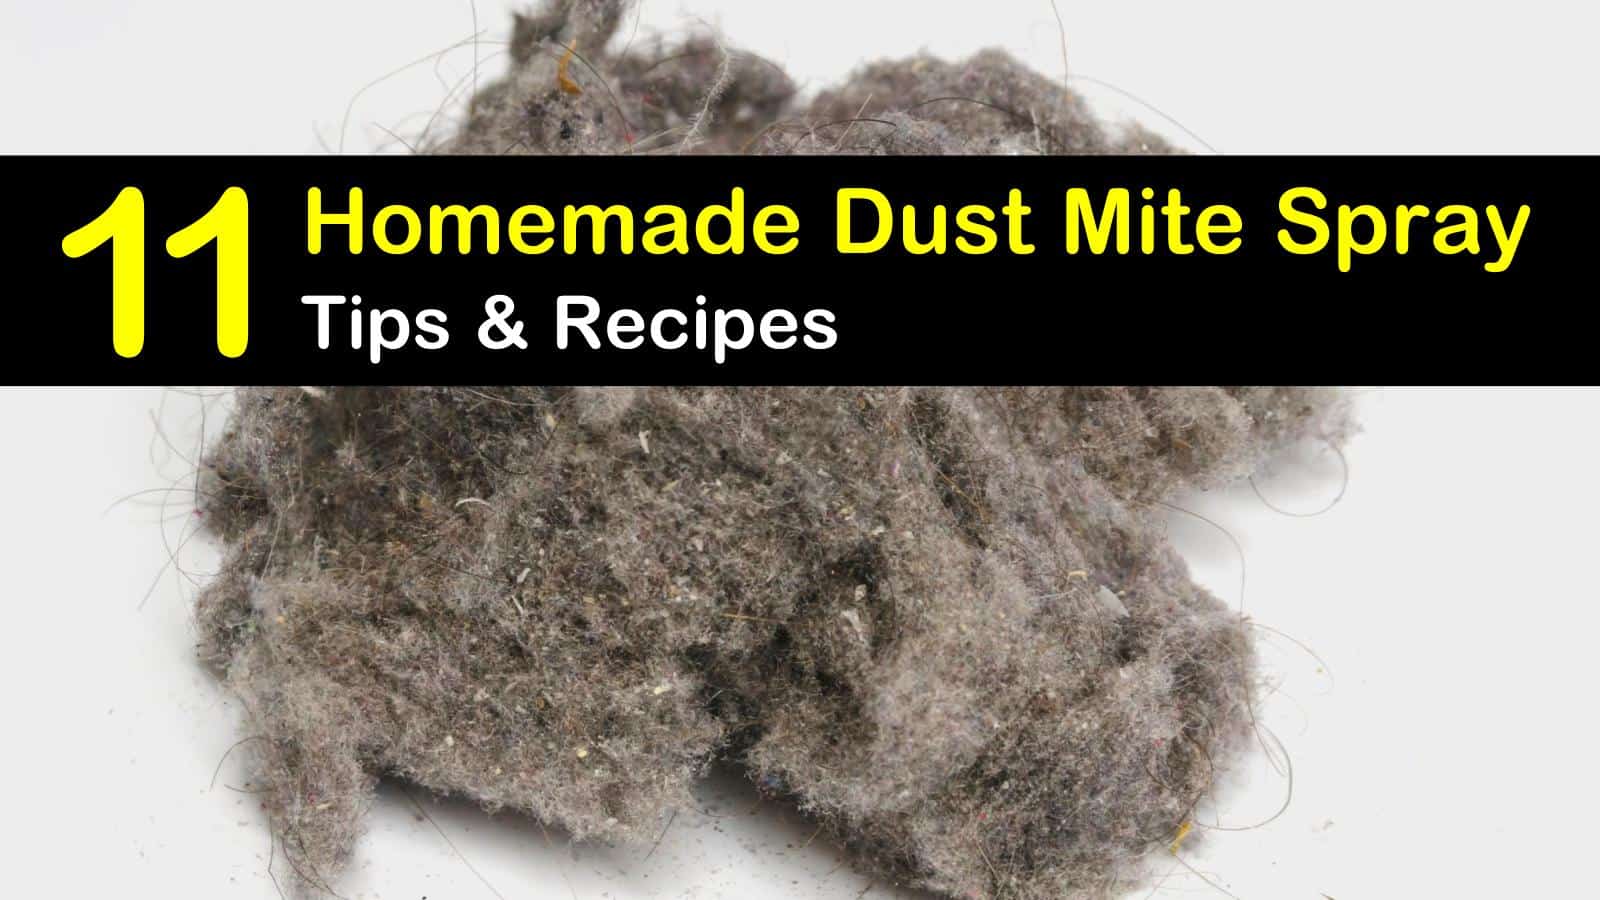 homemade dust mite spray titleimg1